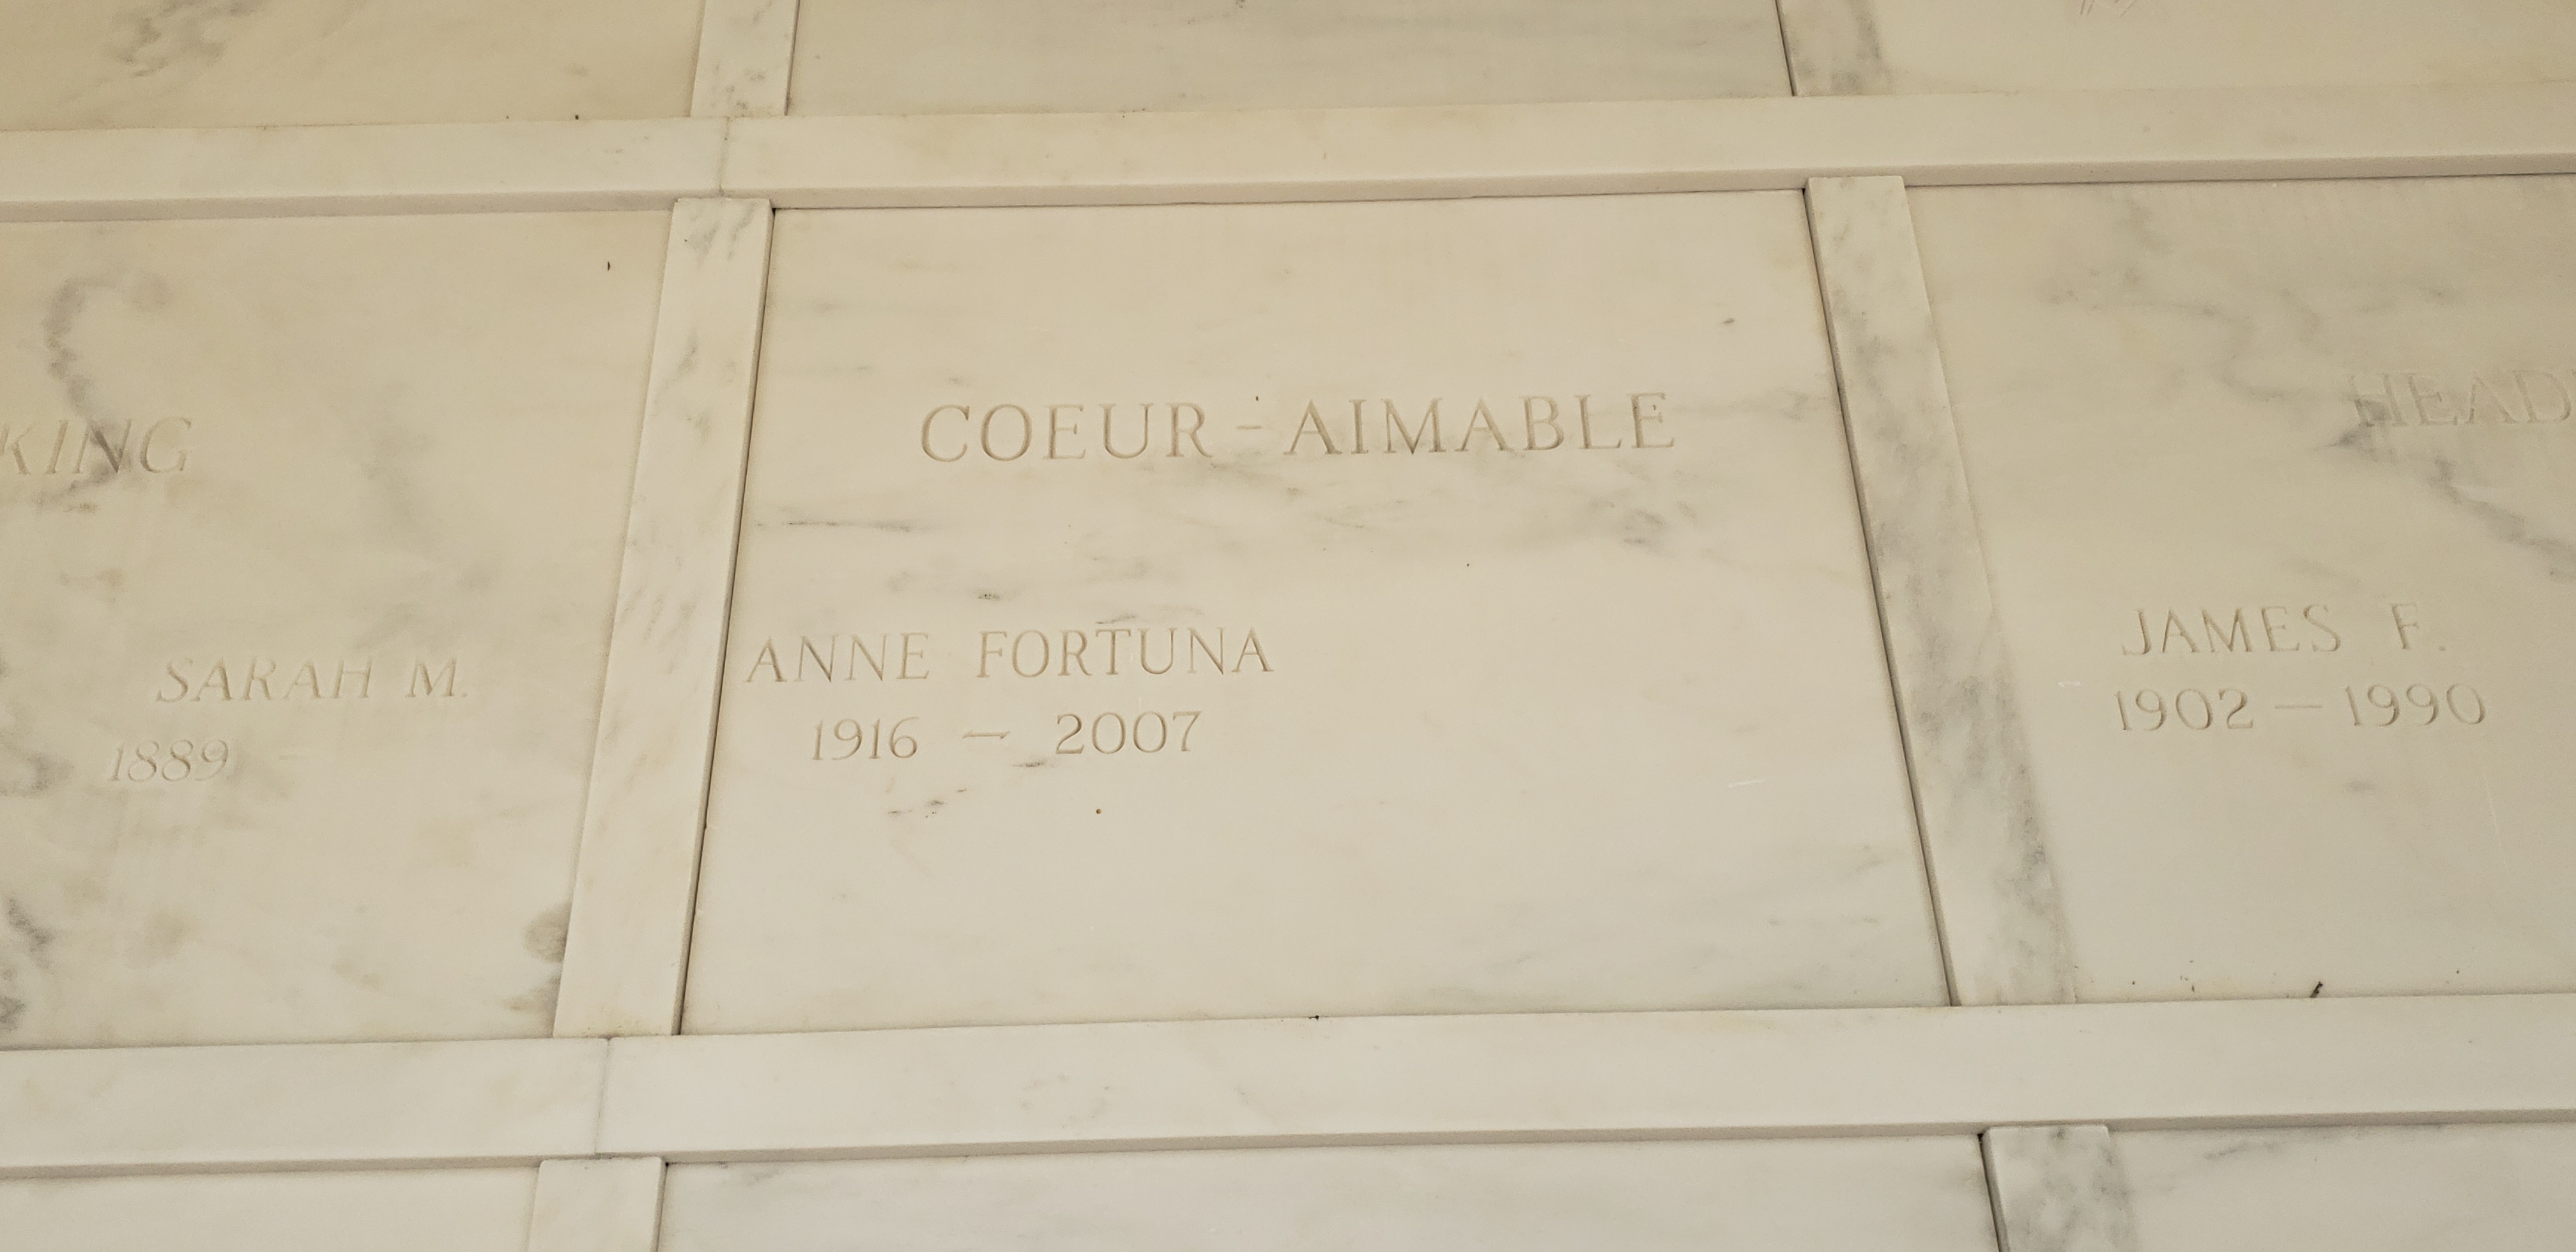 Anne Fortuna Coeur-Aimable